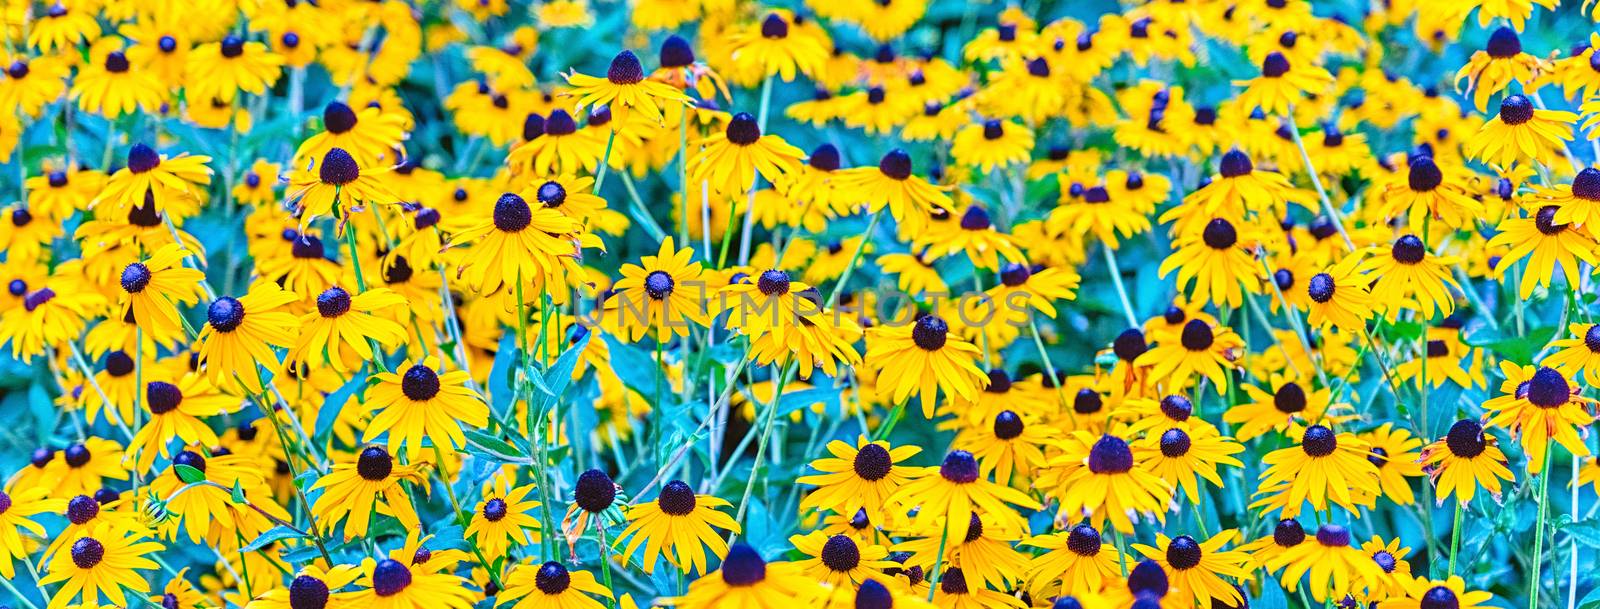 Field of Rudbeckia hirta, aka black-eyed-Susan flowers  by marcorubino